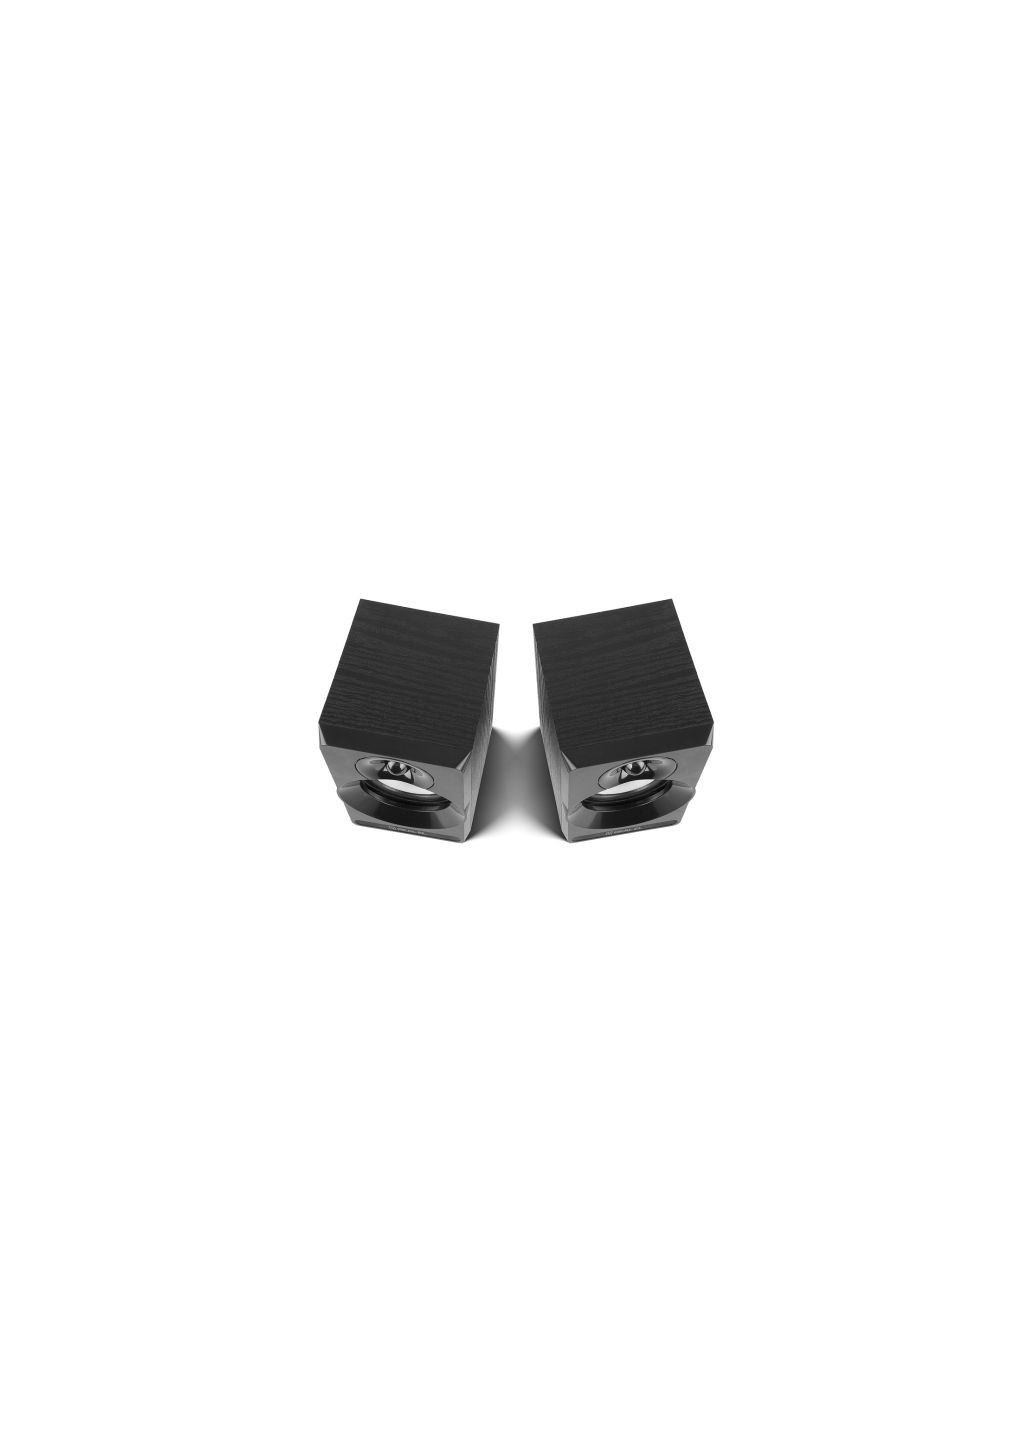 Акустическая система S200 USB Black Real-El s-200 usb black (275100310)